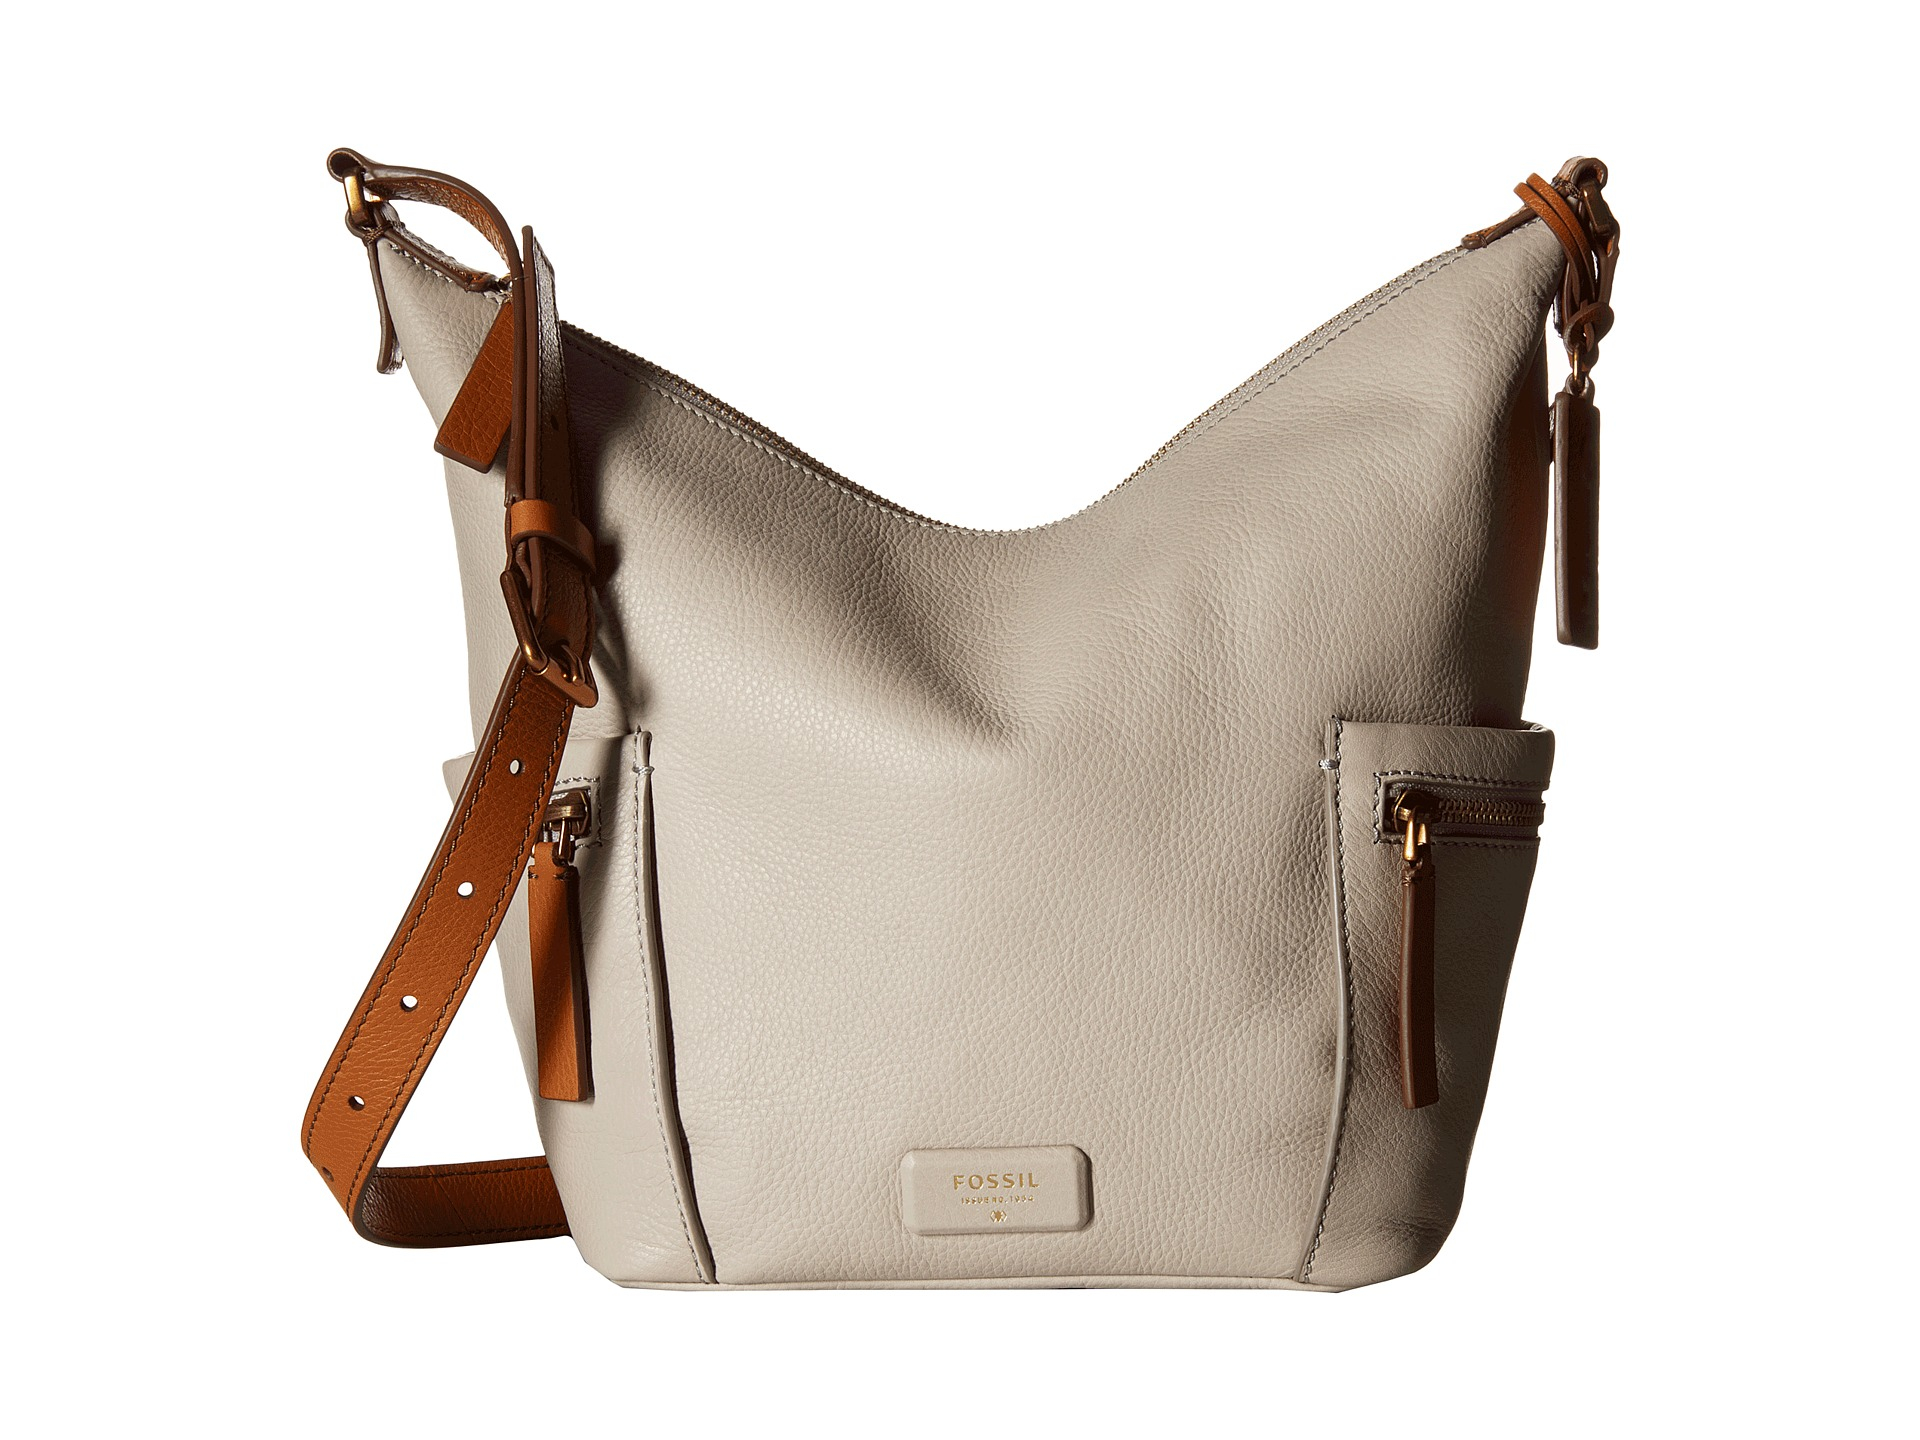 Fossil Women's Emerson Leather Satchel Purse Handbag, Brown (Model